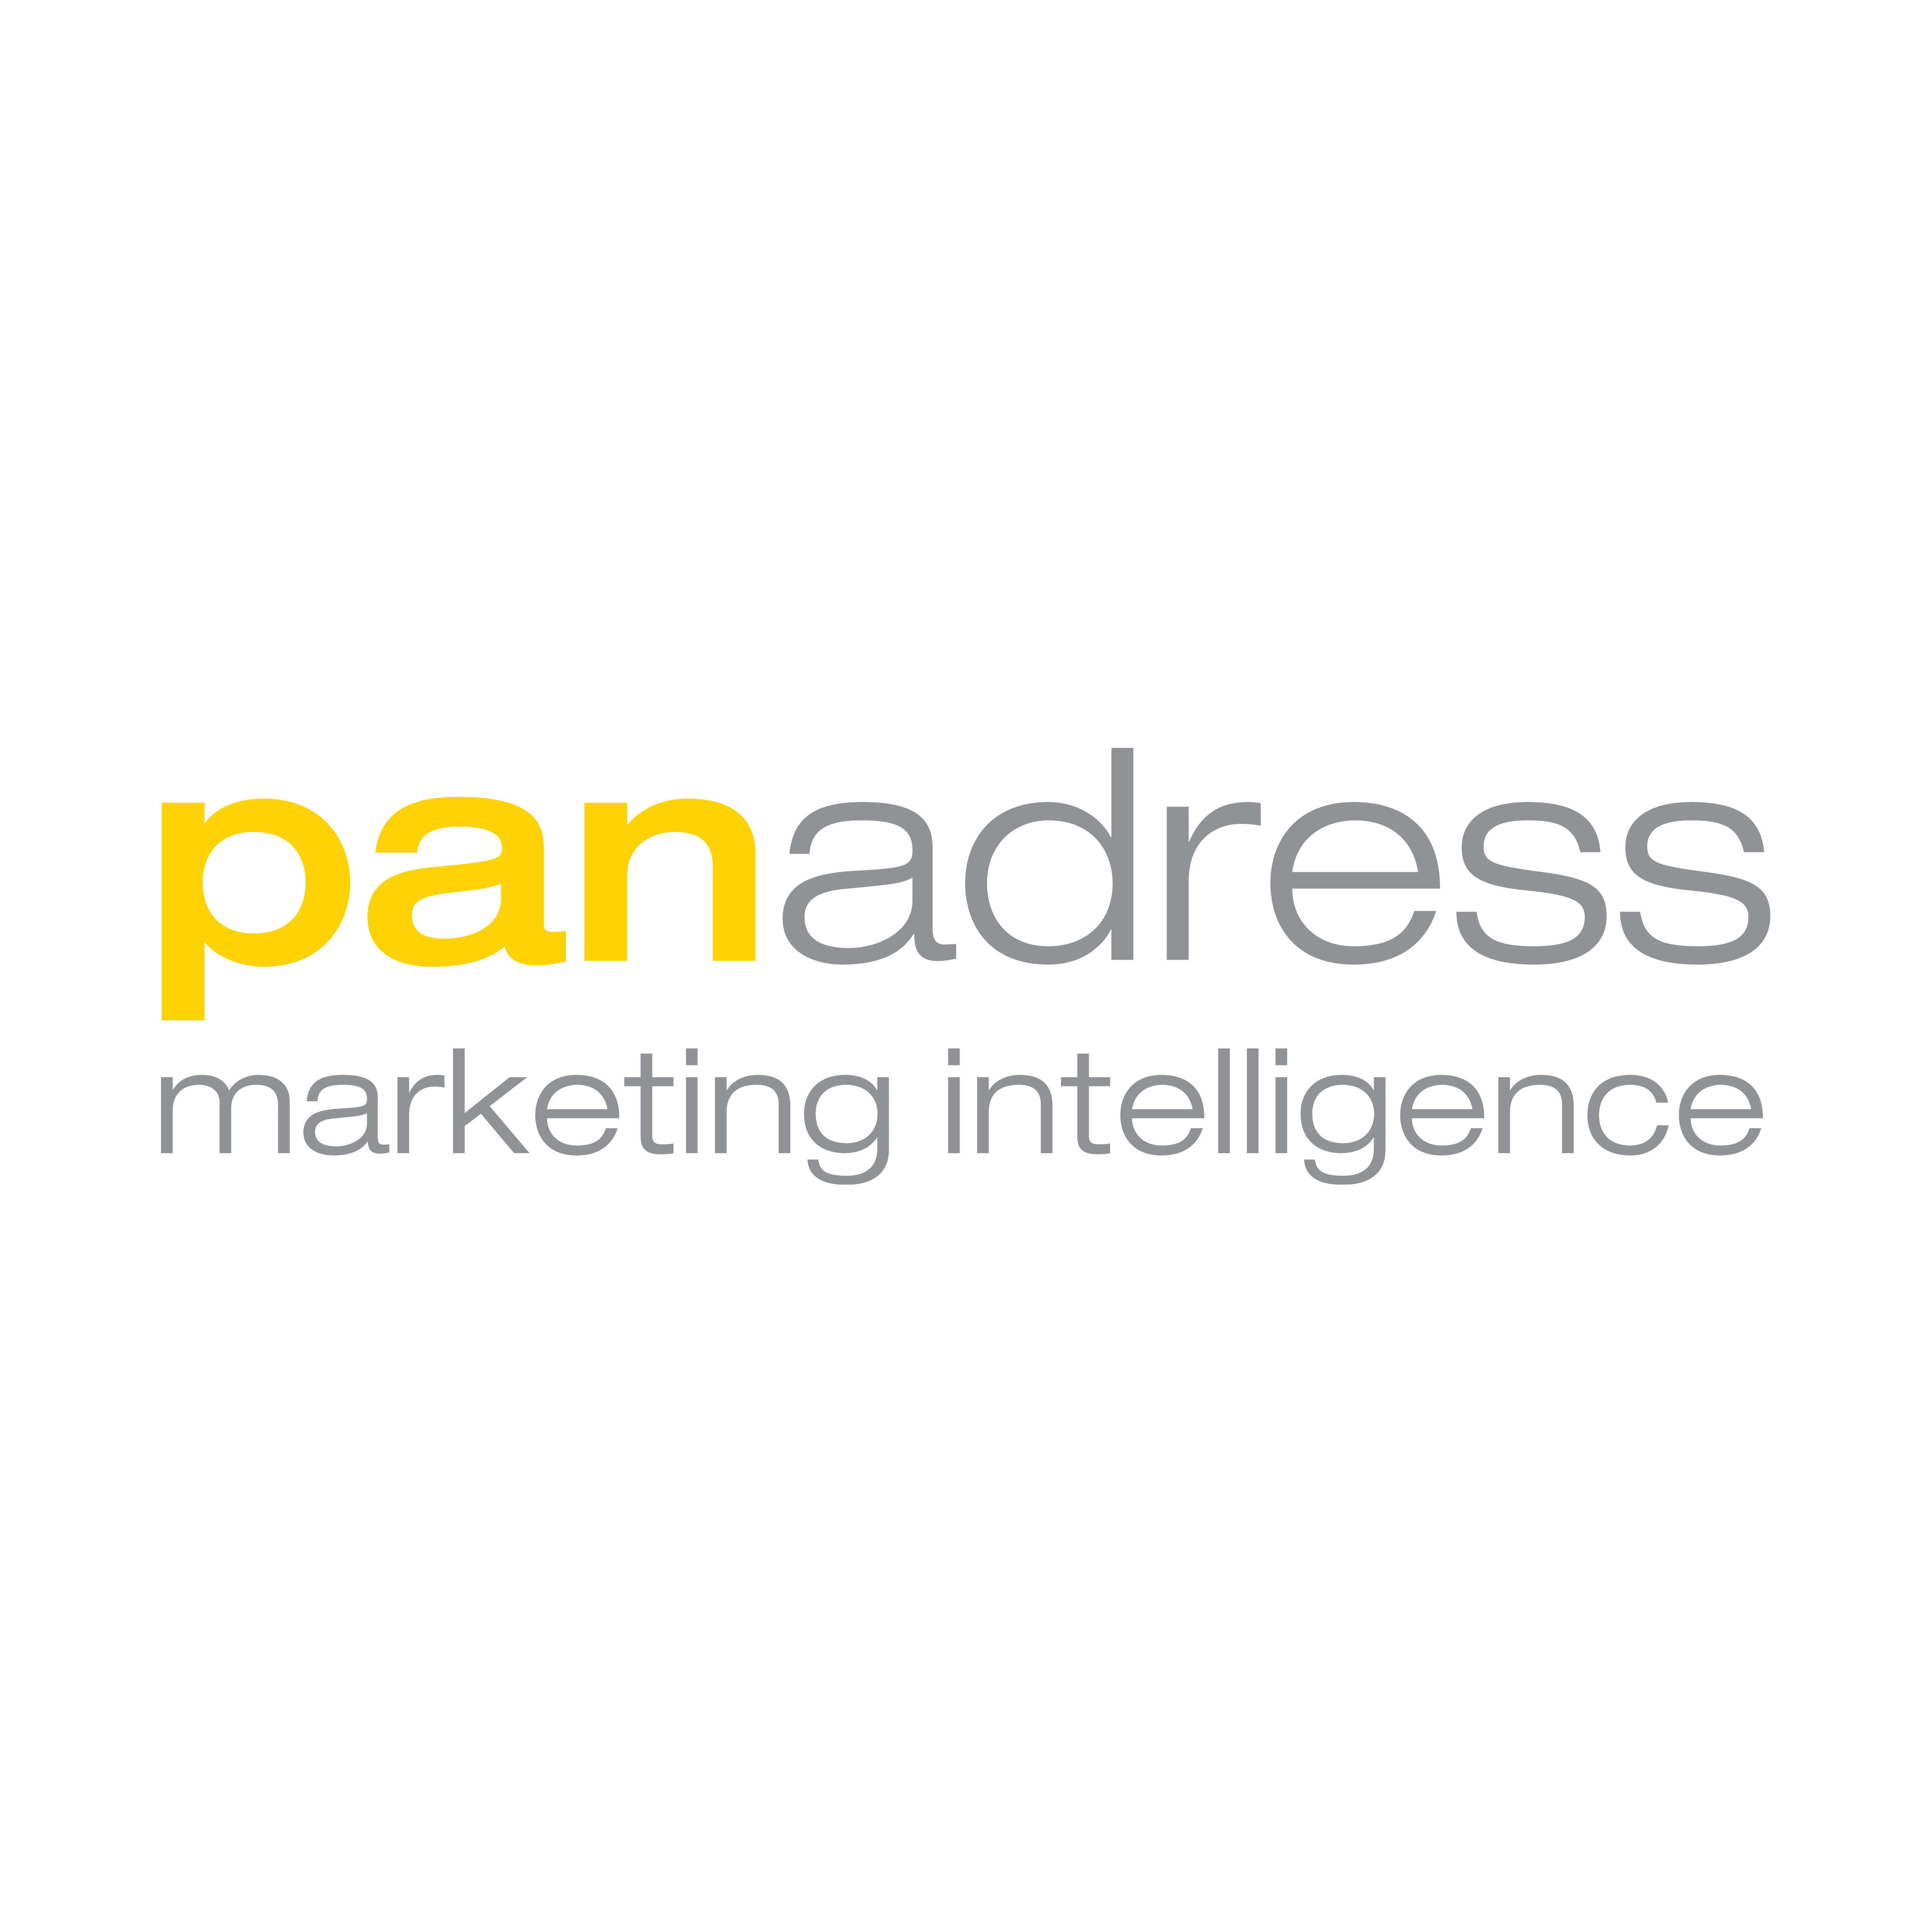 Partnerlogo panadress marketing intelligence GmbH